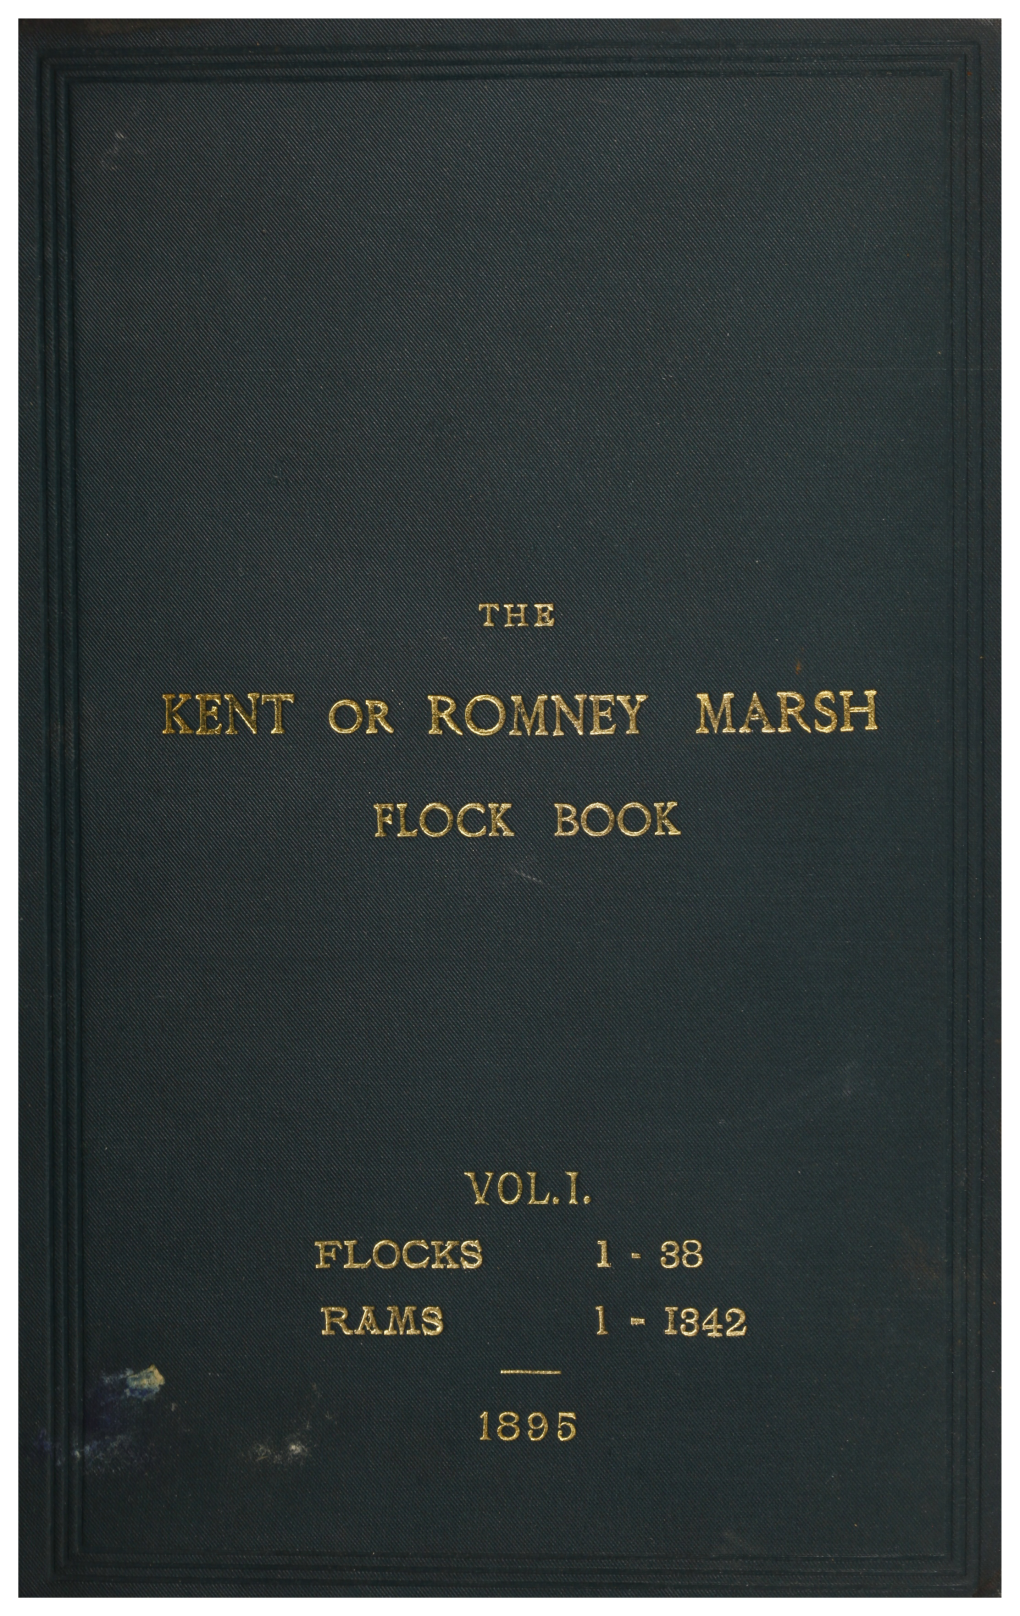 Kent Or Romney Marsh Sheep